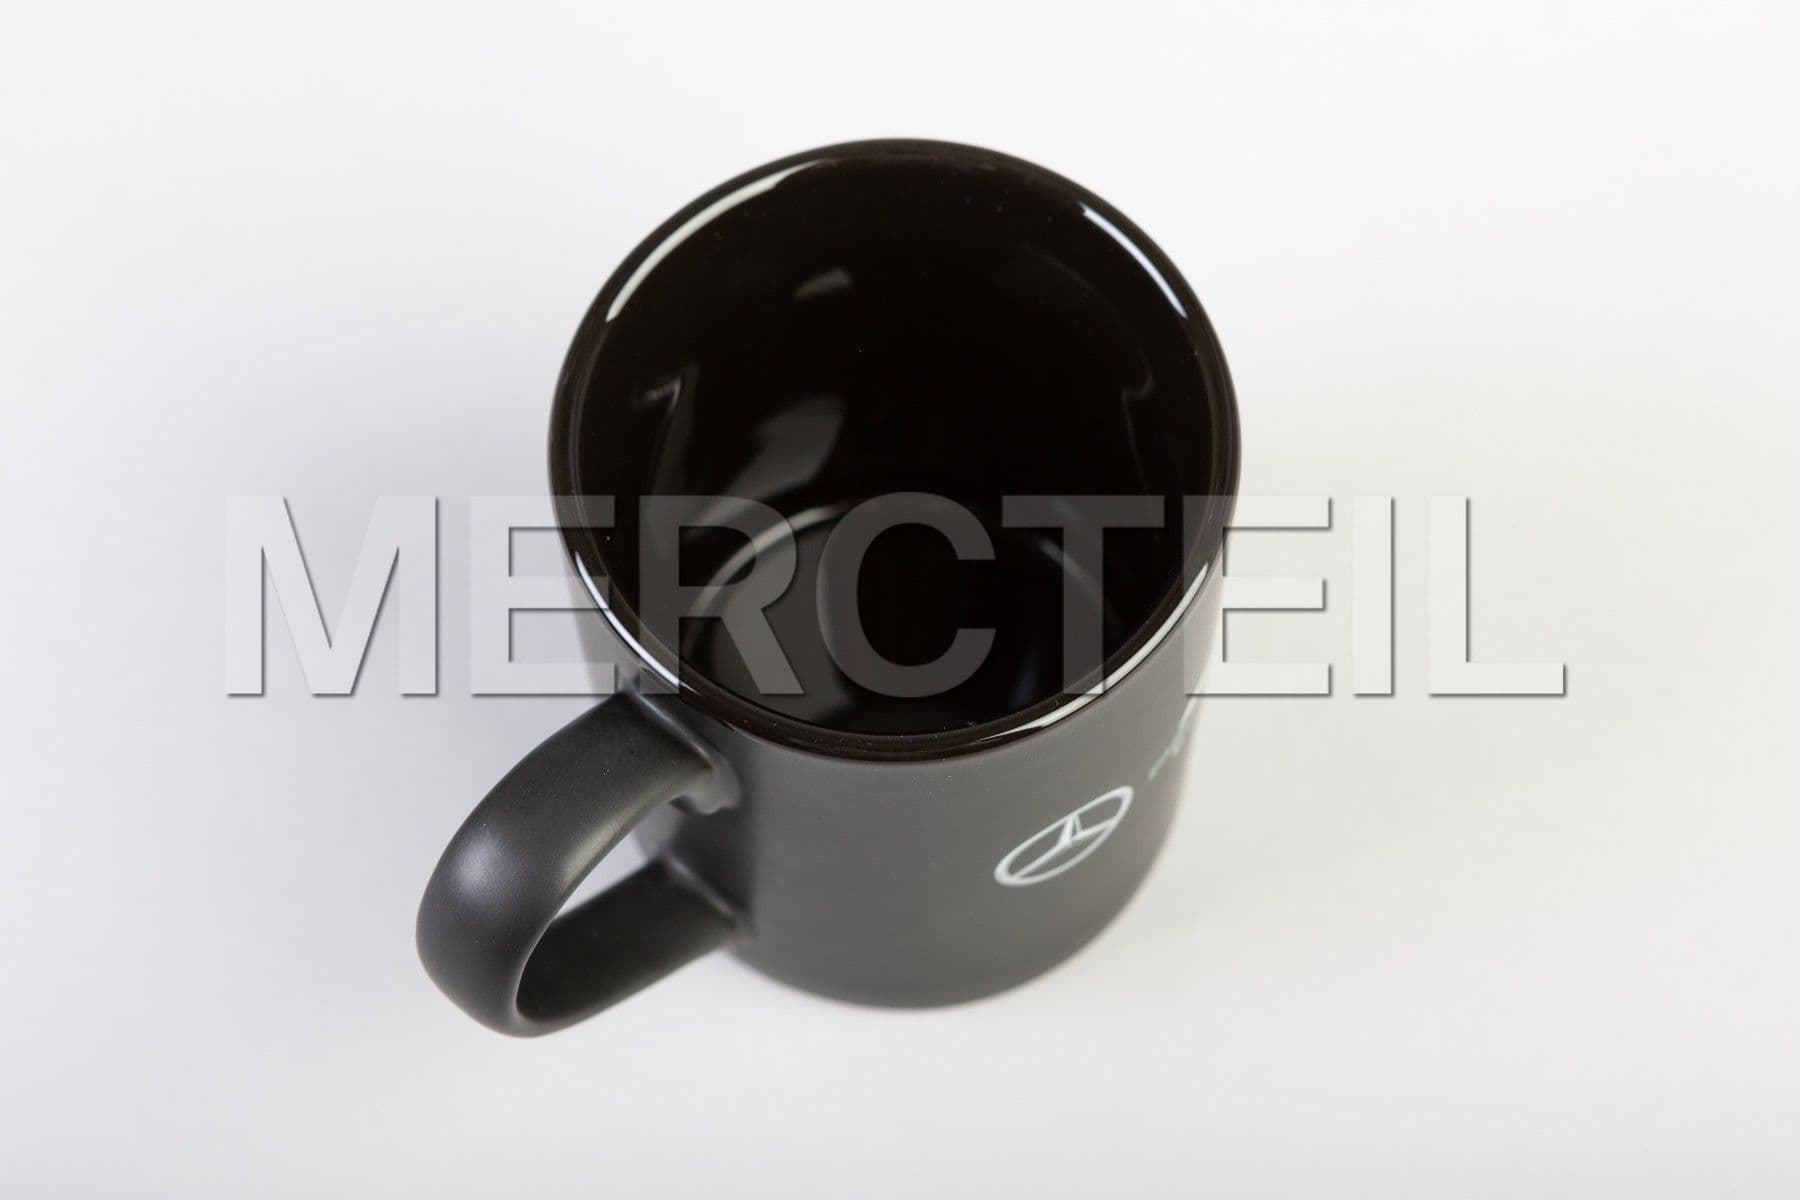 AMG Petronas Keramik Kaffeebecher Original Mercedes AMG Collection (Teilenummer: B67996457)